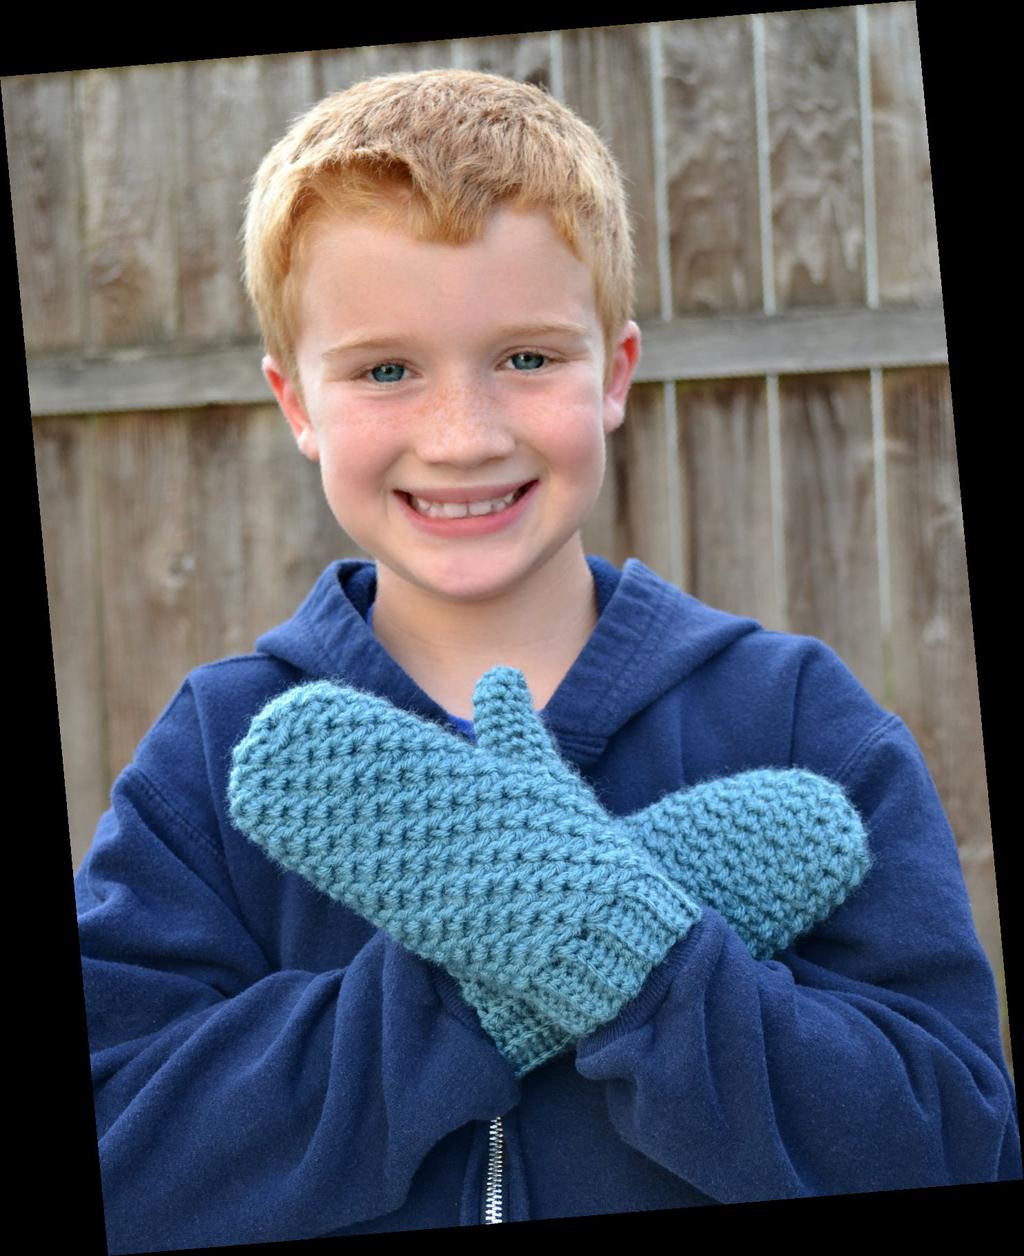 5mm) crochet hooks, stitch marker, yarn needle, scissors Size Child (Adult) Mittens stretch to fit a range of sizes.